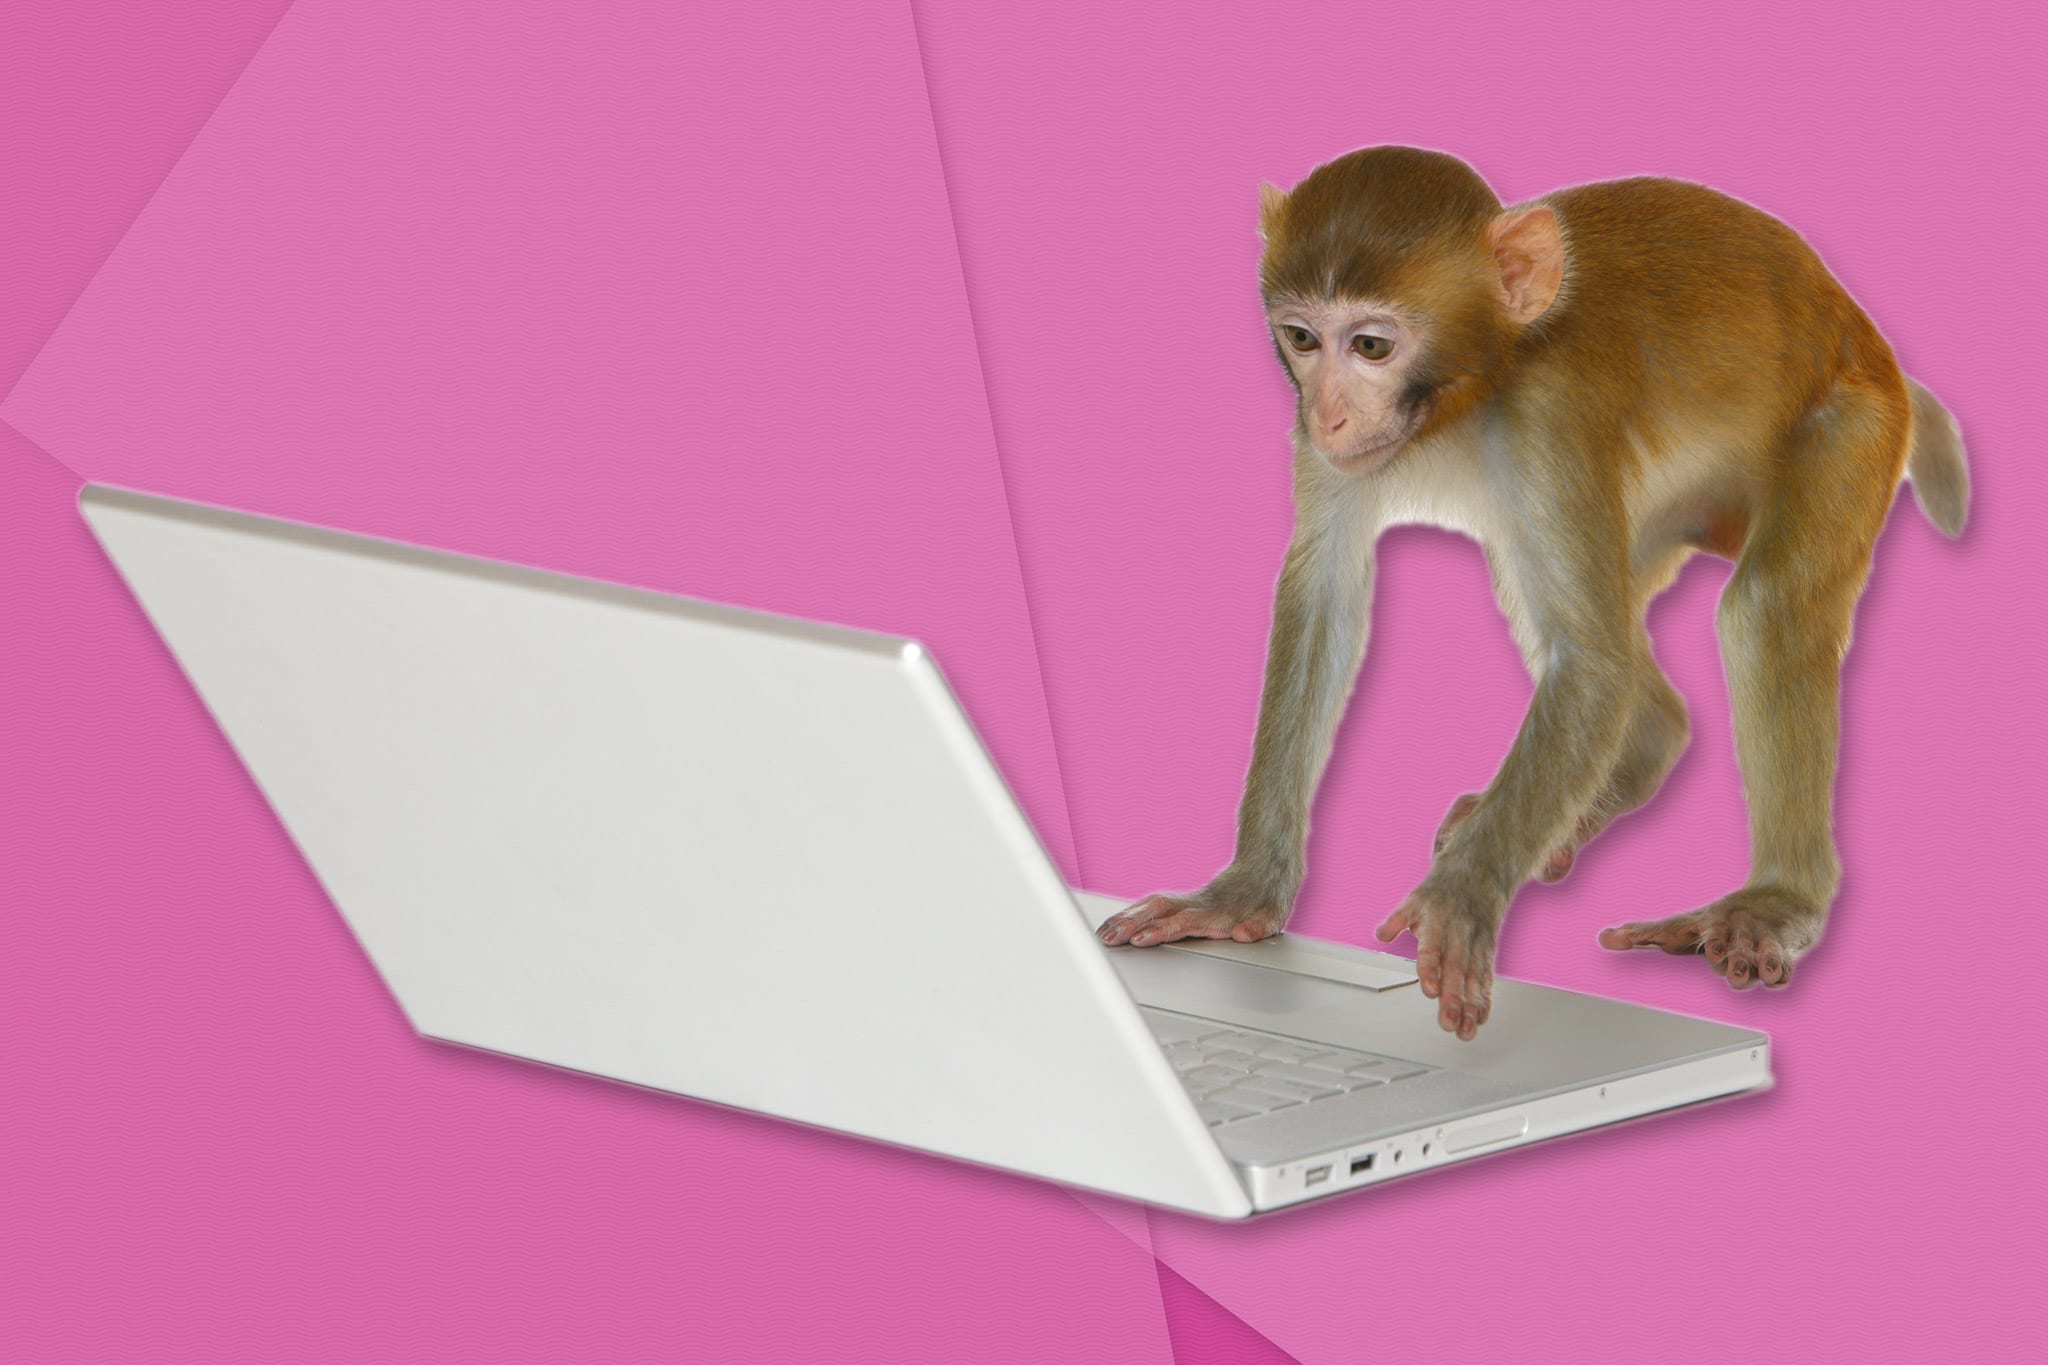 Monkey using a computer